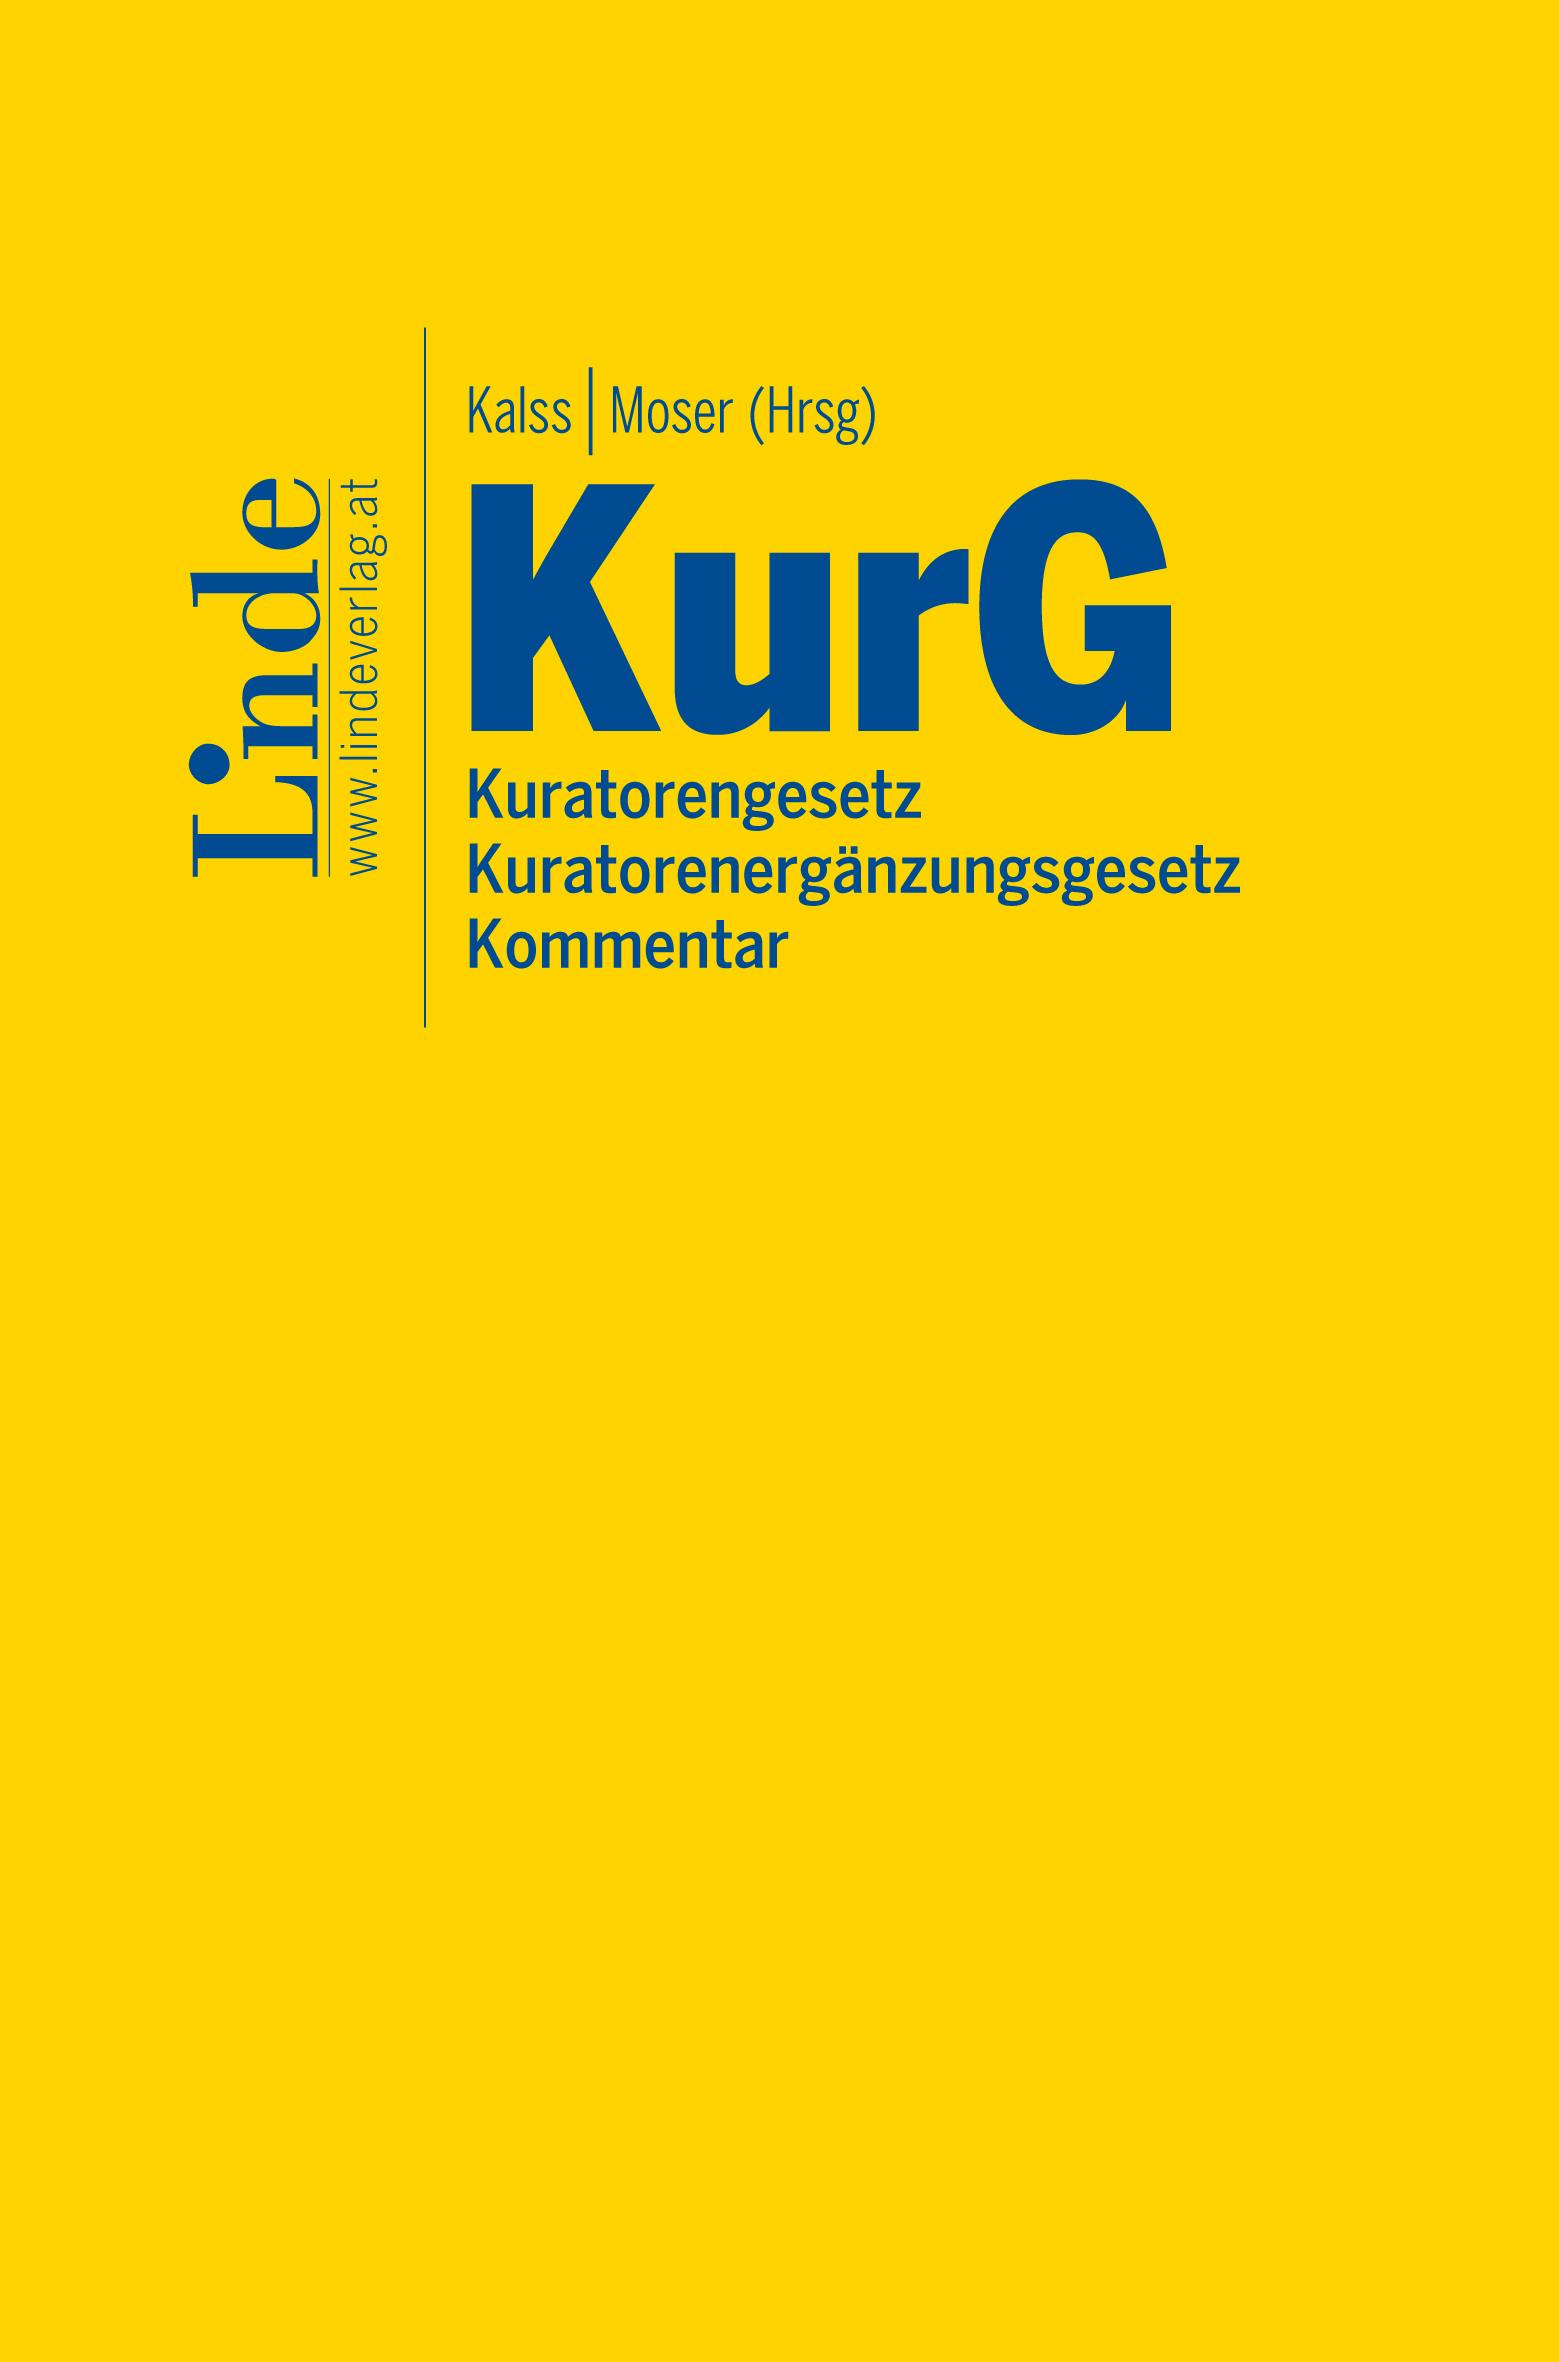 Kalss | Moser (Hrsg.)
Kuratorengesetz | Kuratorenergänzungsgesetz
Kommentar